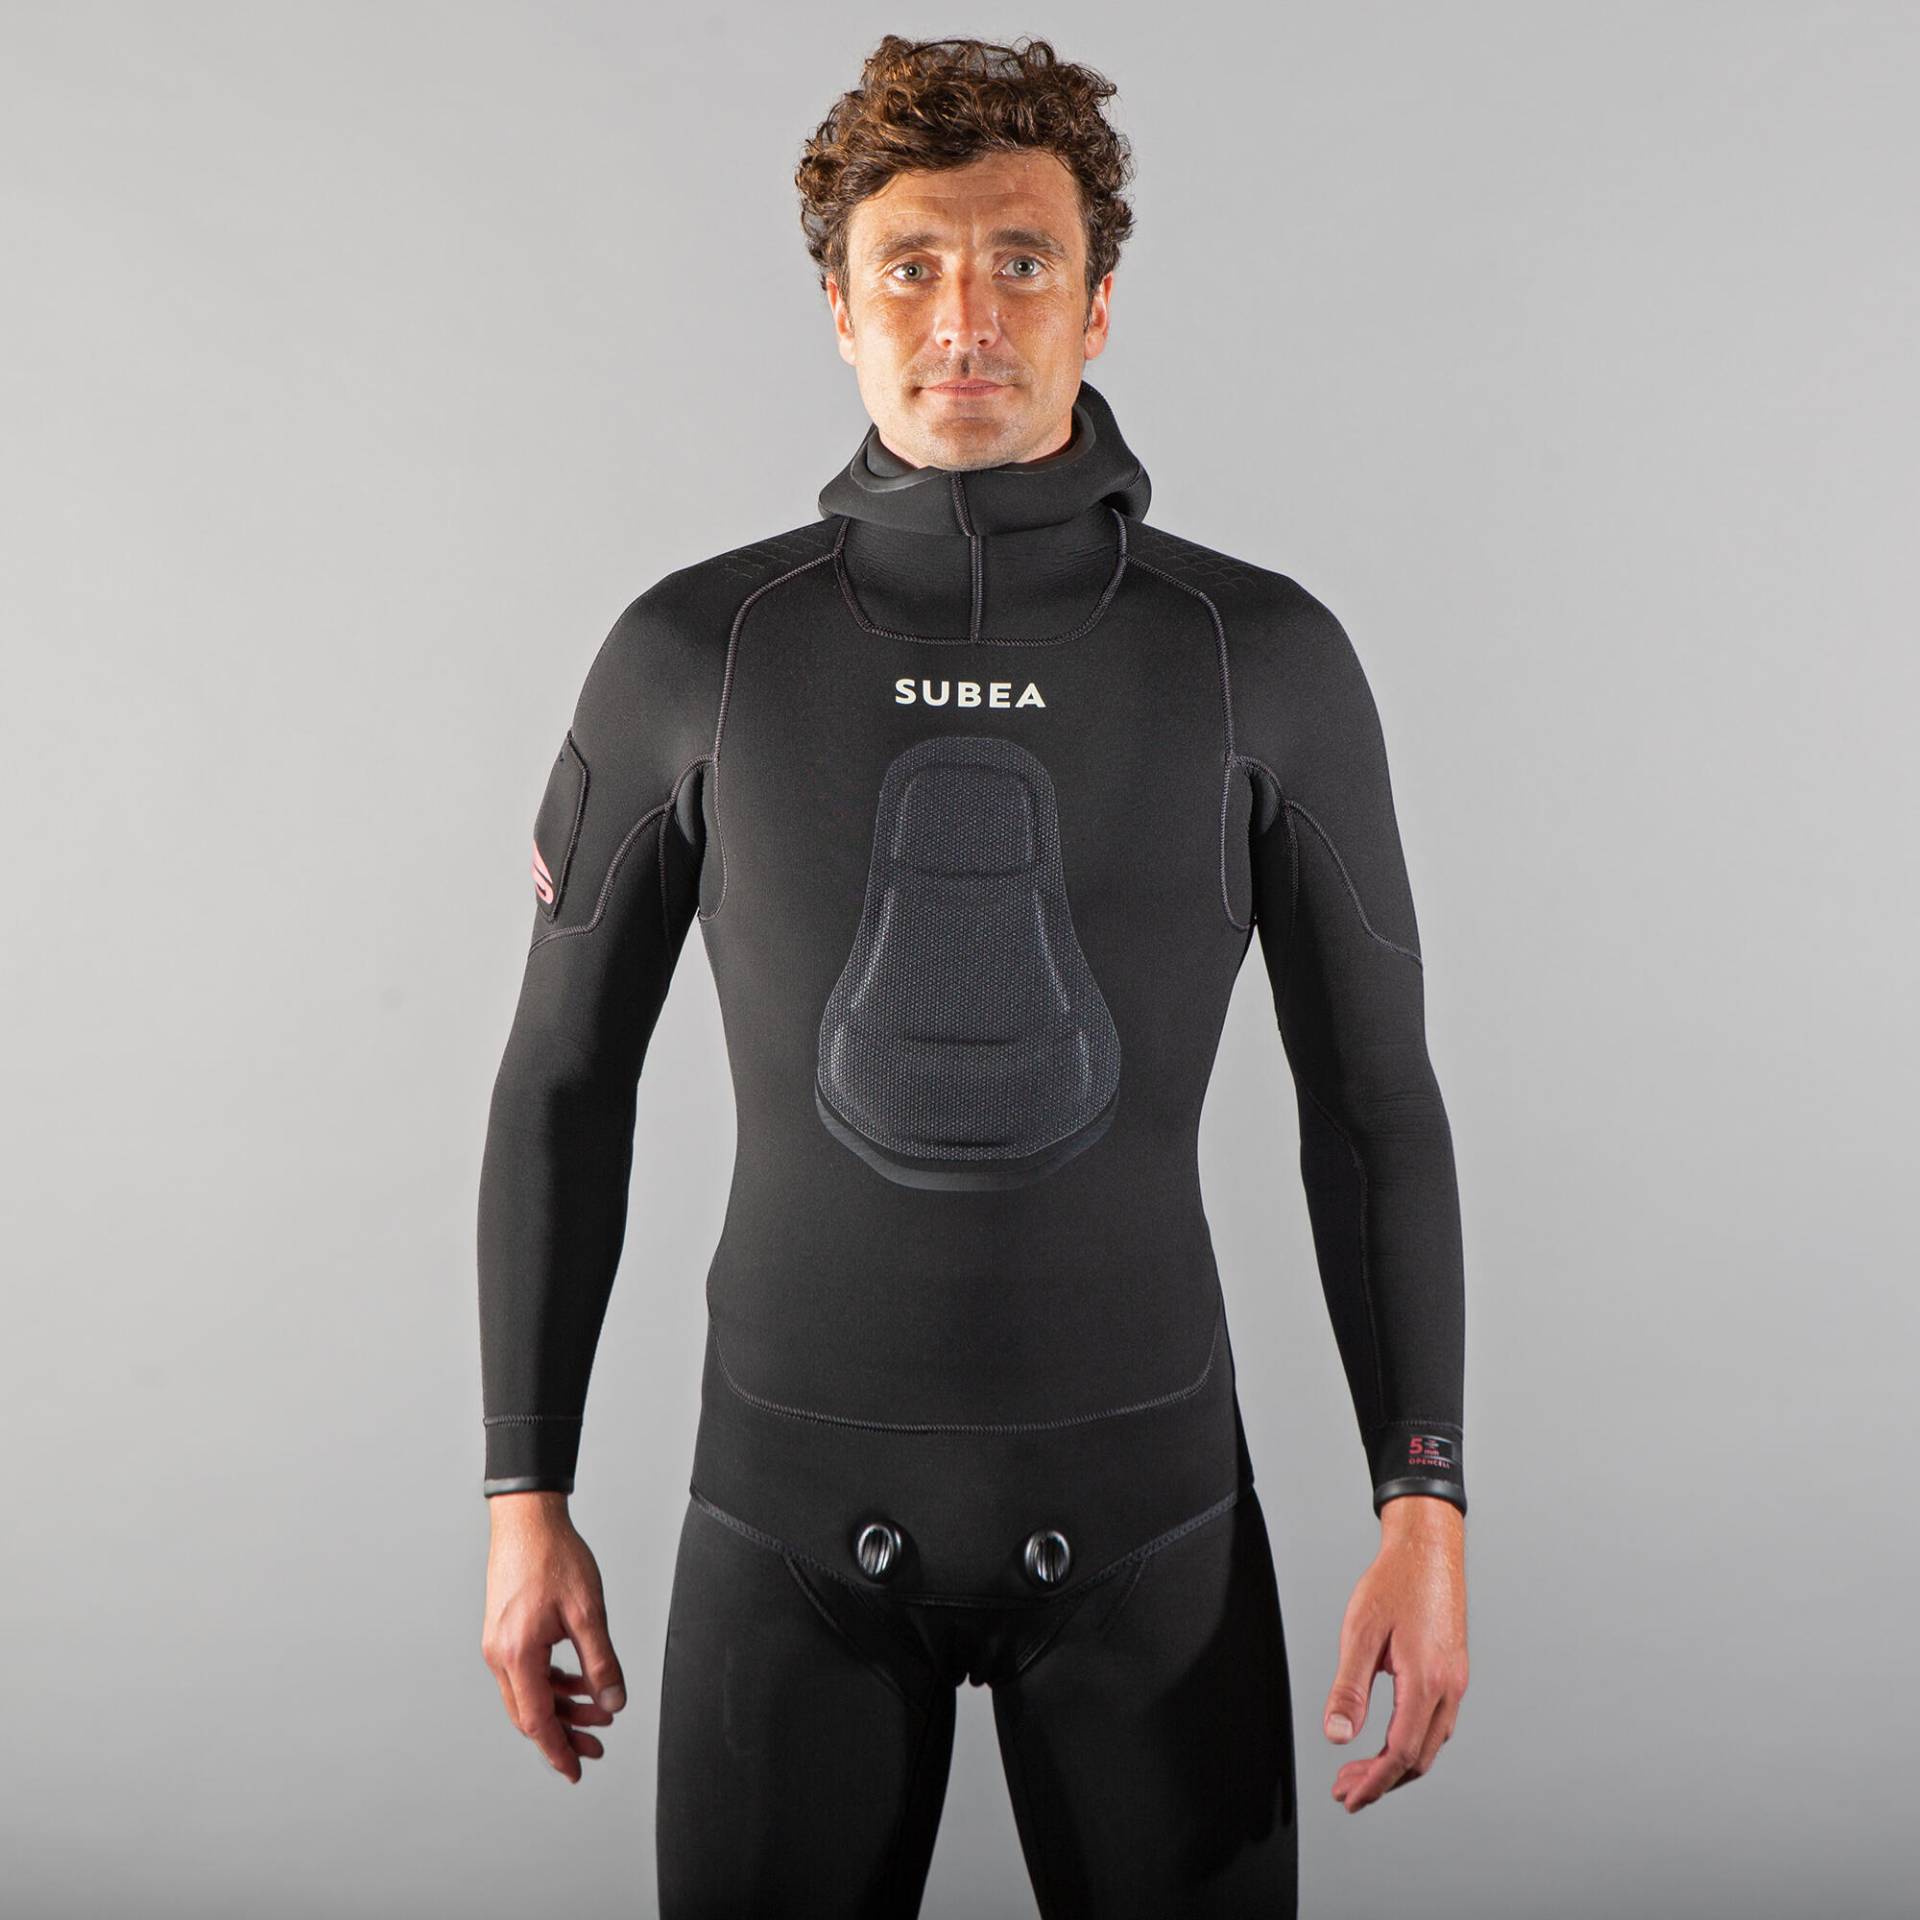 Neoprenjacke Freediving Herren Neopren 5 mm - SPF 900 schwarz von SUBEA